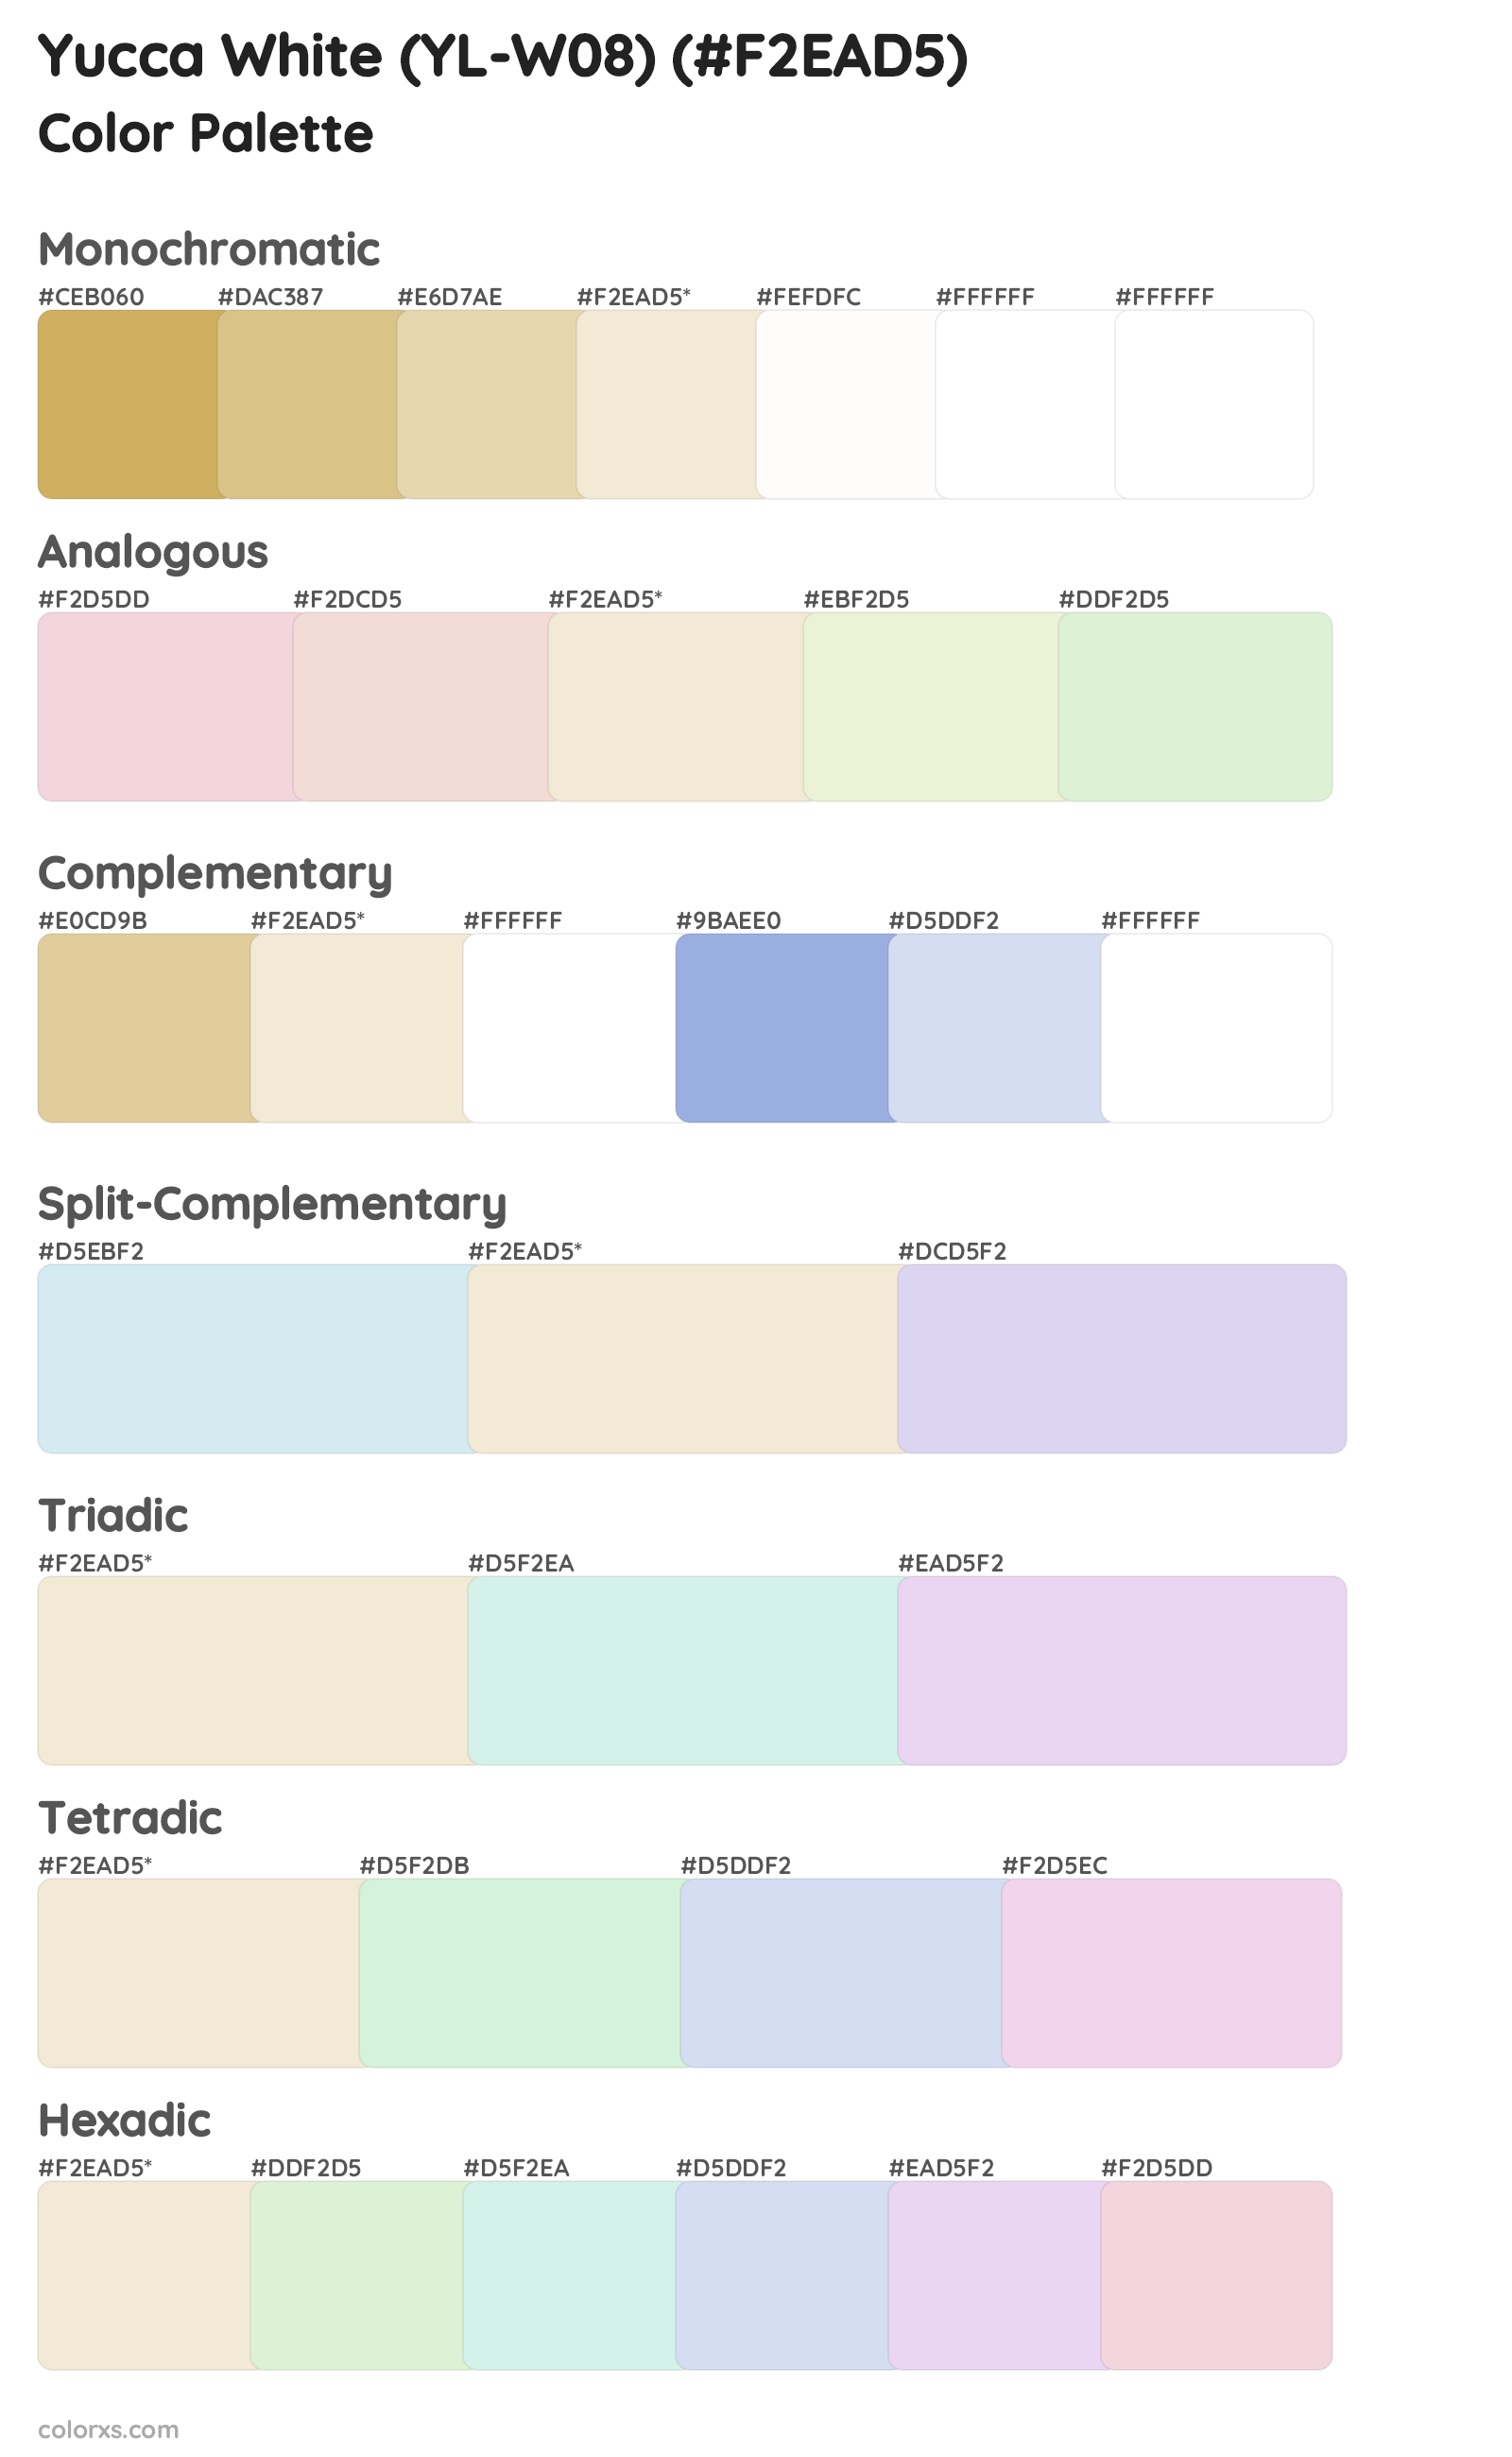 Yucca White (YL-W08) Color Scheme Palettes